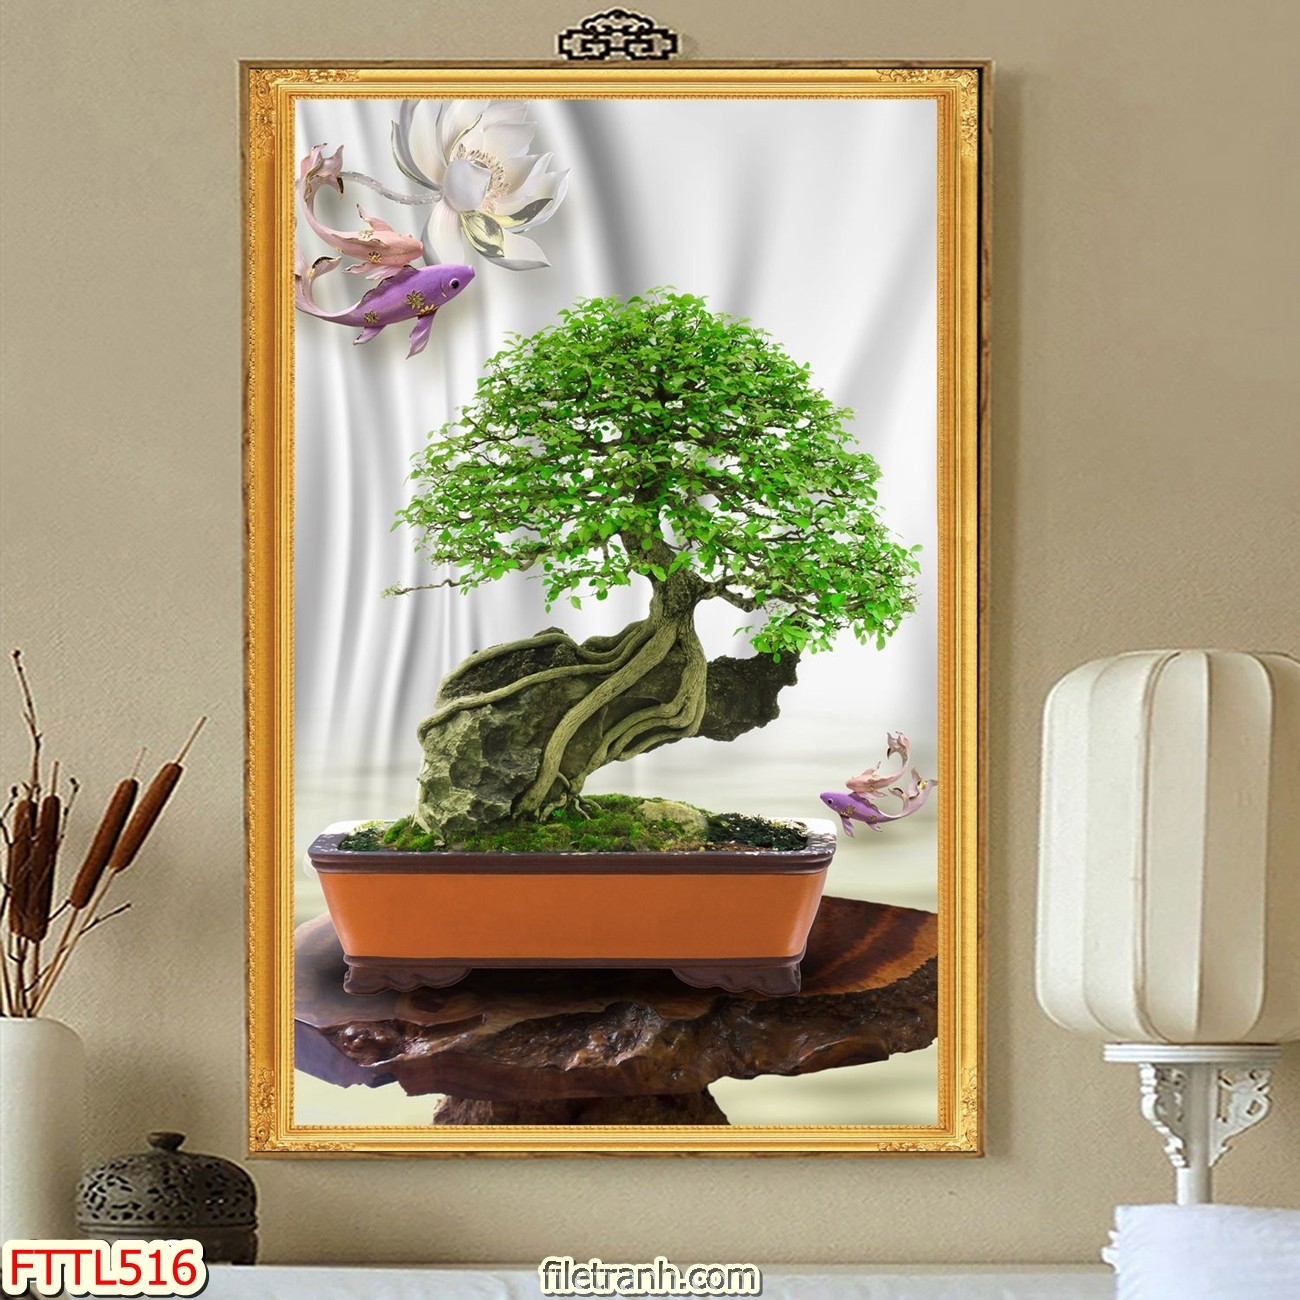 https://filetranh.com/file-tranh-chau-mai-bonsai/file-tranh-chau-mai-bonsai-fttl516.html